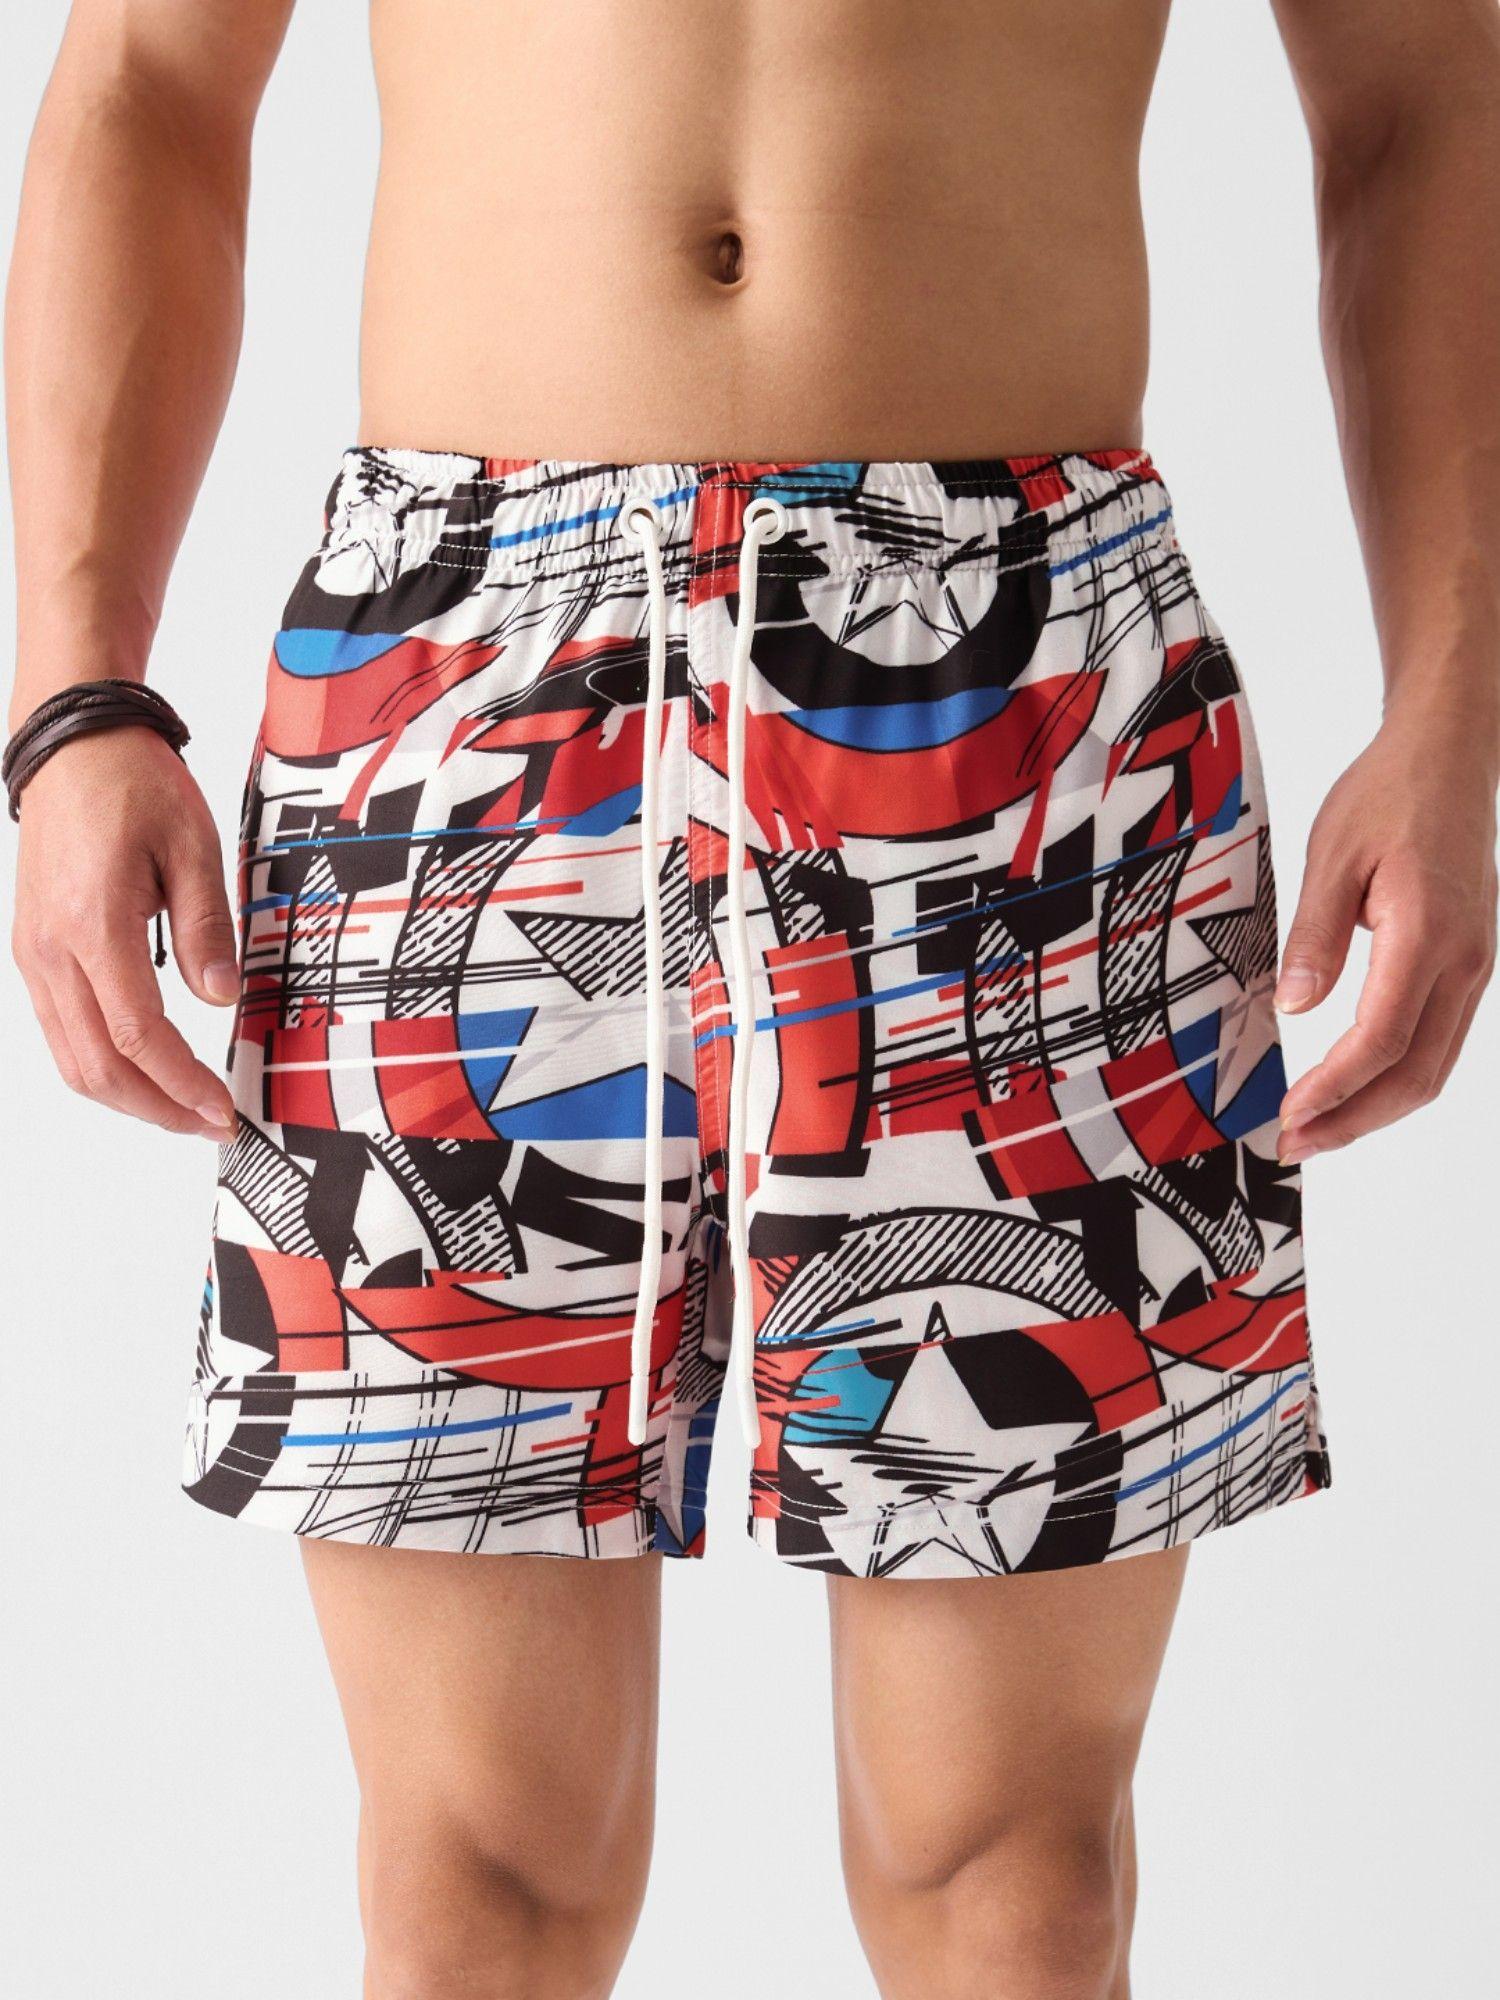 captain america: shield pattern beach shorts for mens